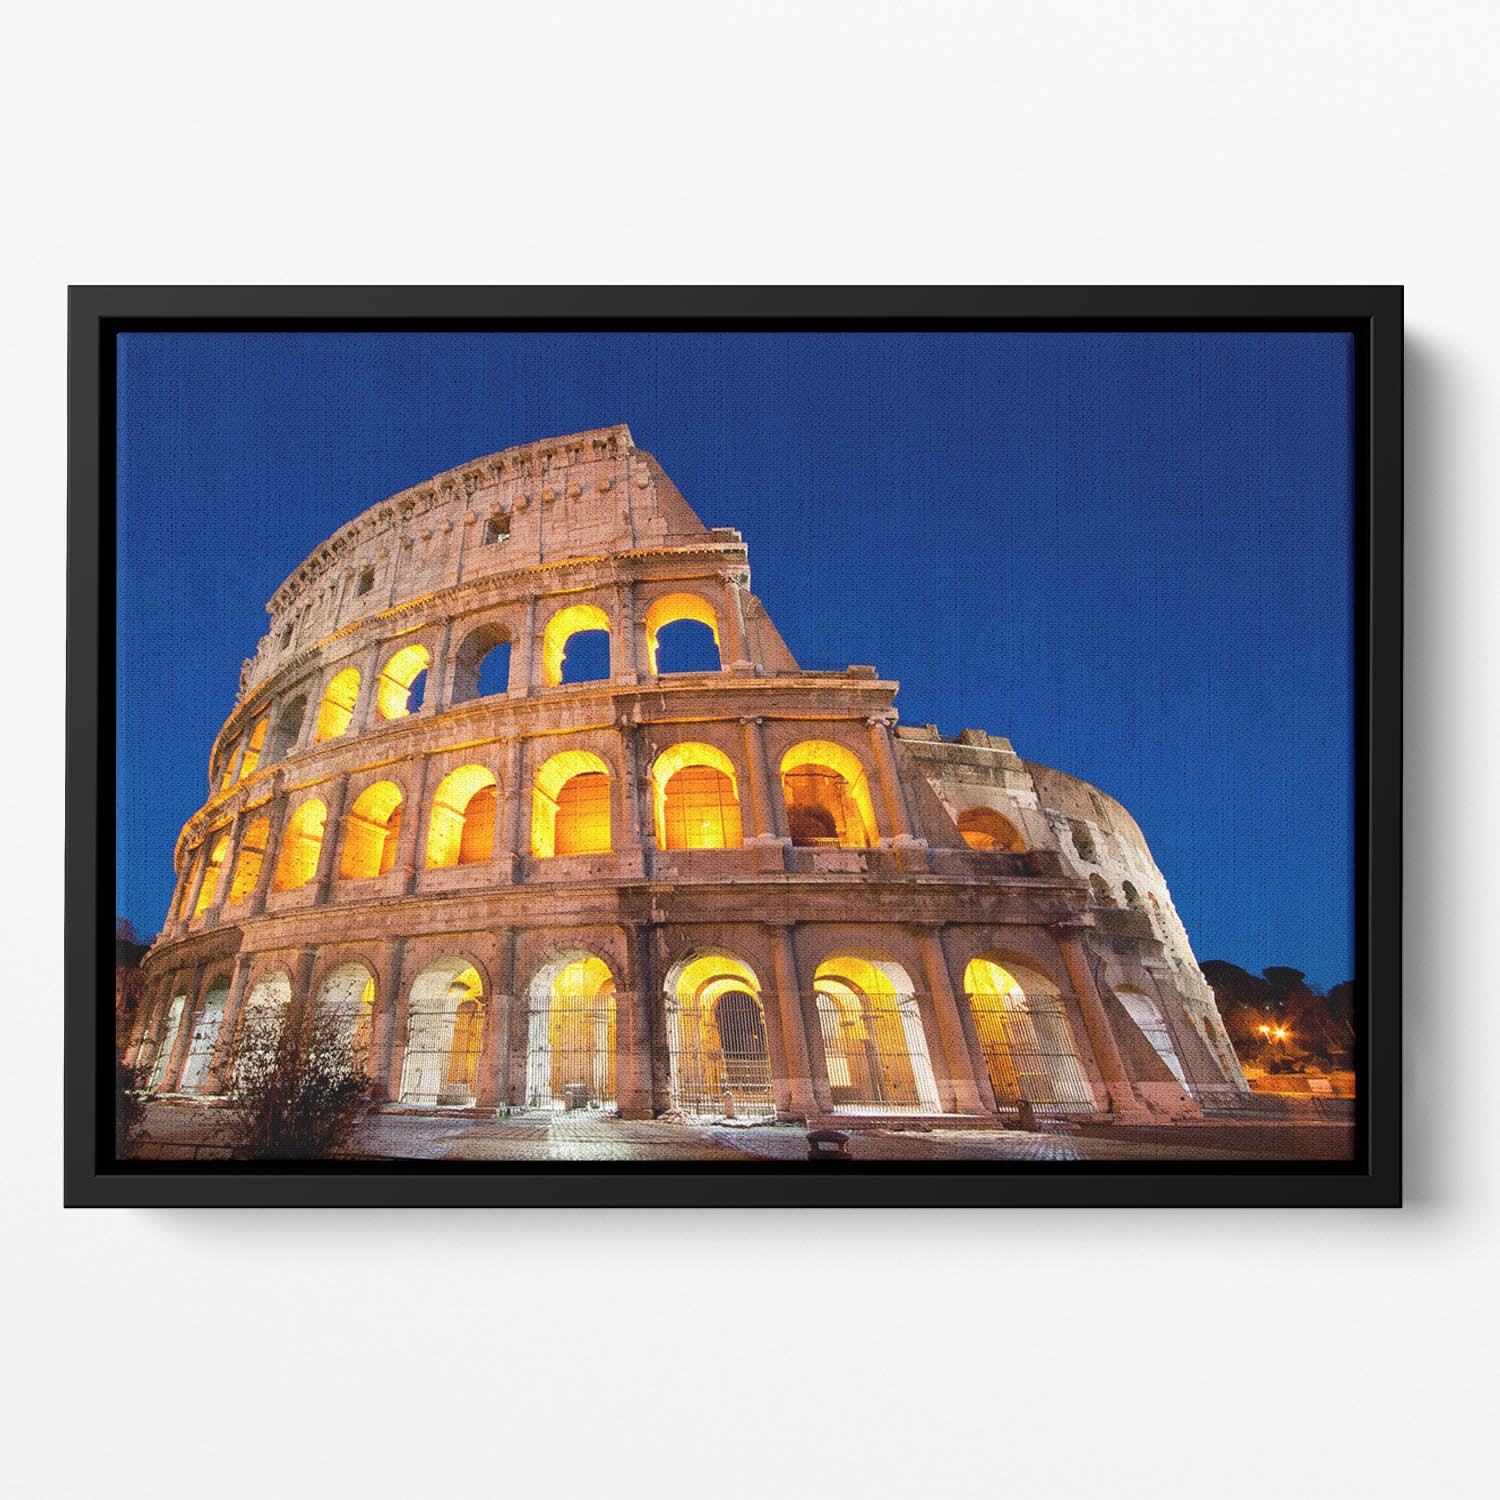 Colosseum Dome at dusk Floating Framed Canvas